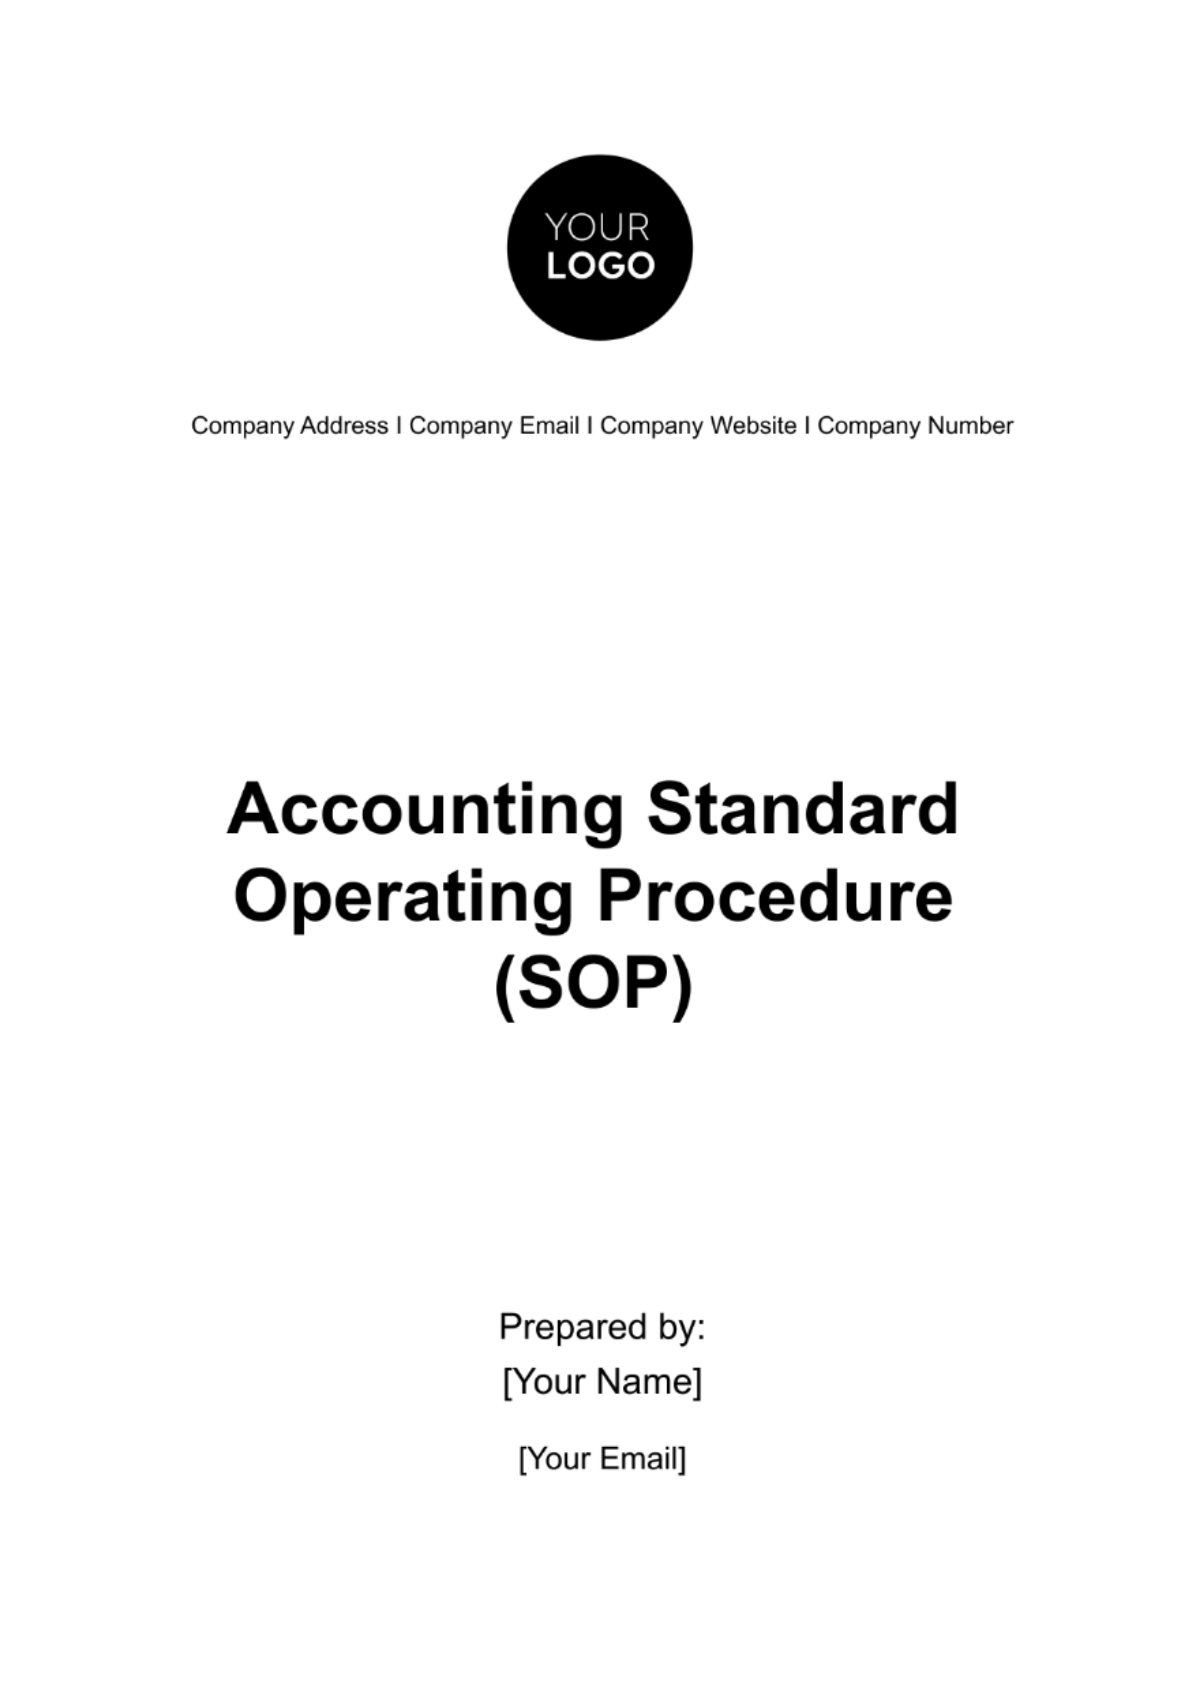 Accounting Standard Operating Procedure (SOP) Template